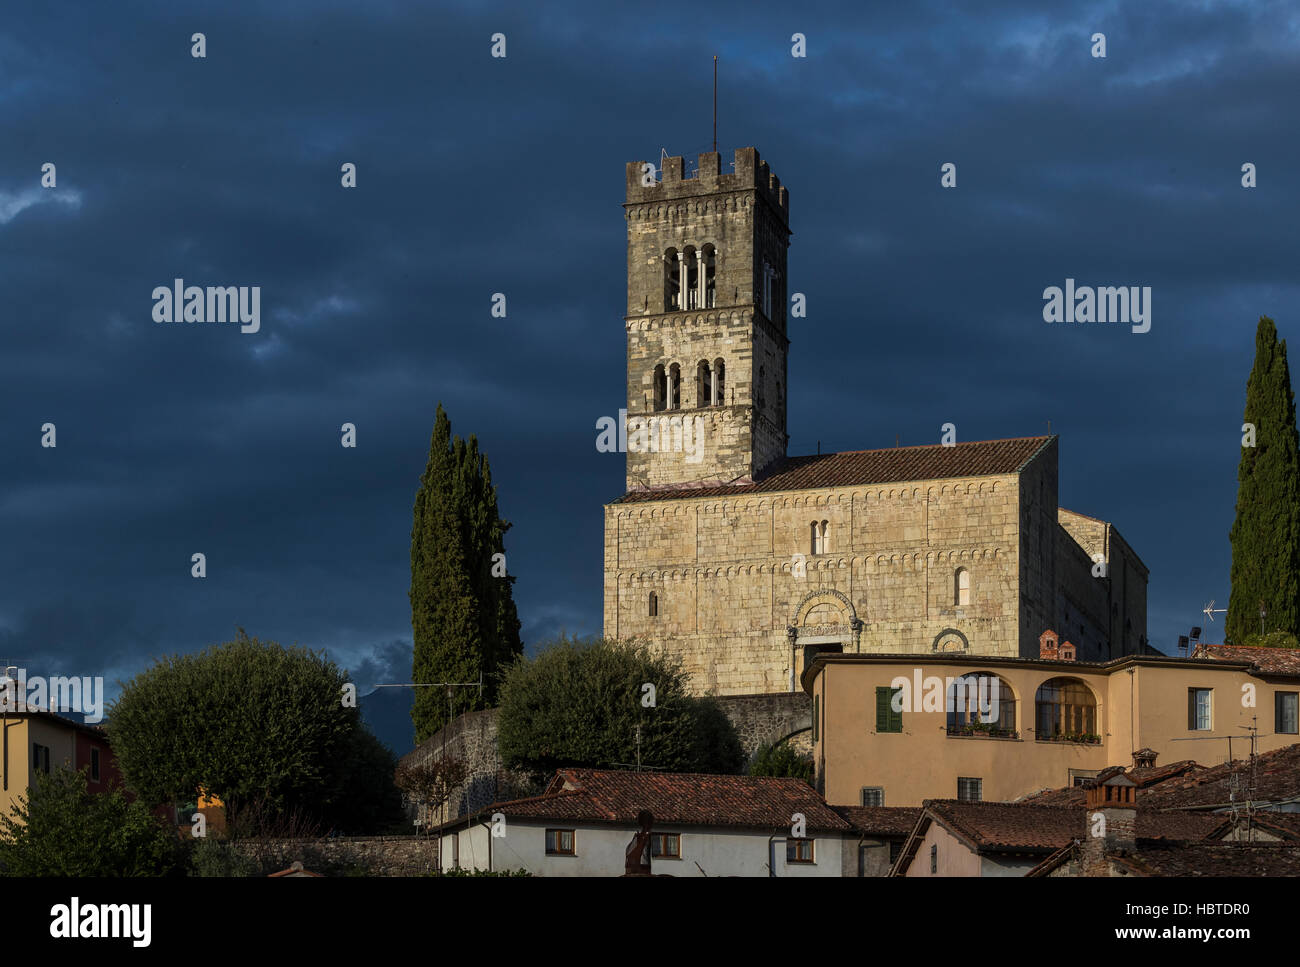 Duomo Di S. Cristoforo. The medieval hilltop town of Barga, in Tuscany, Italy. Stock Photo